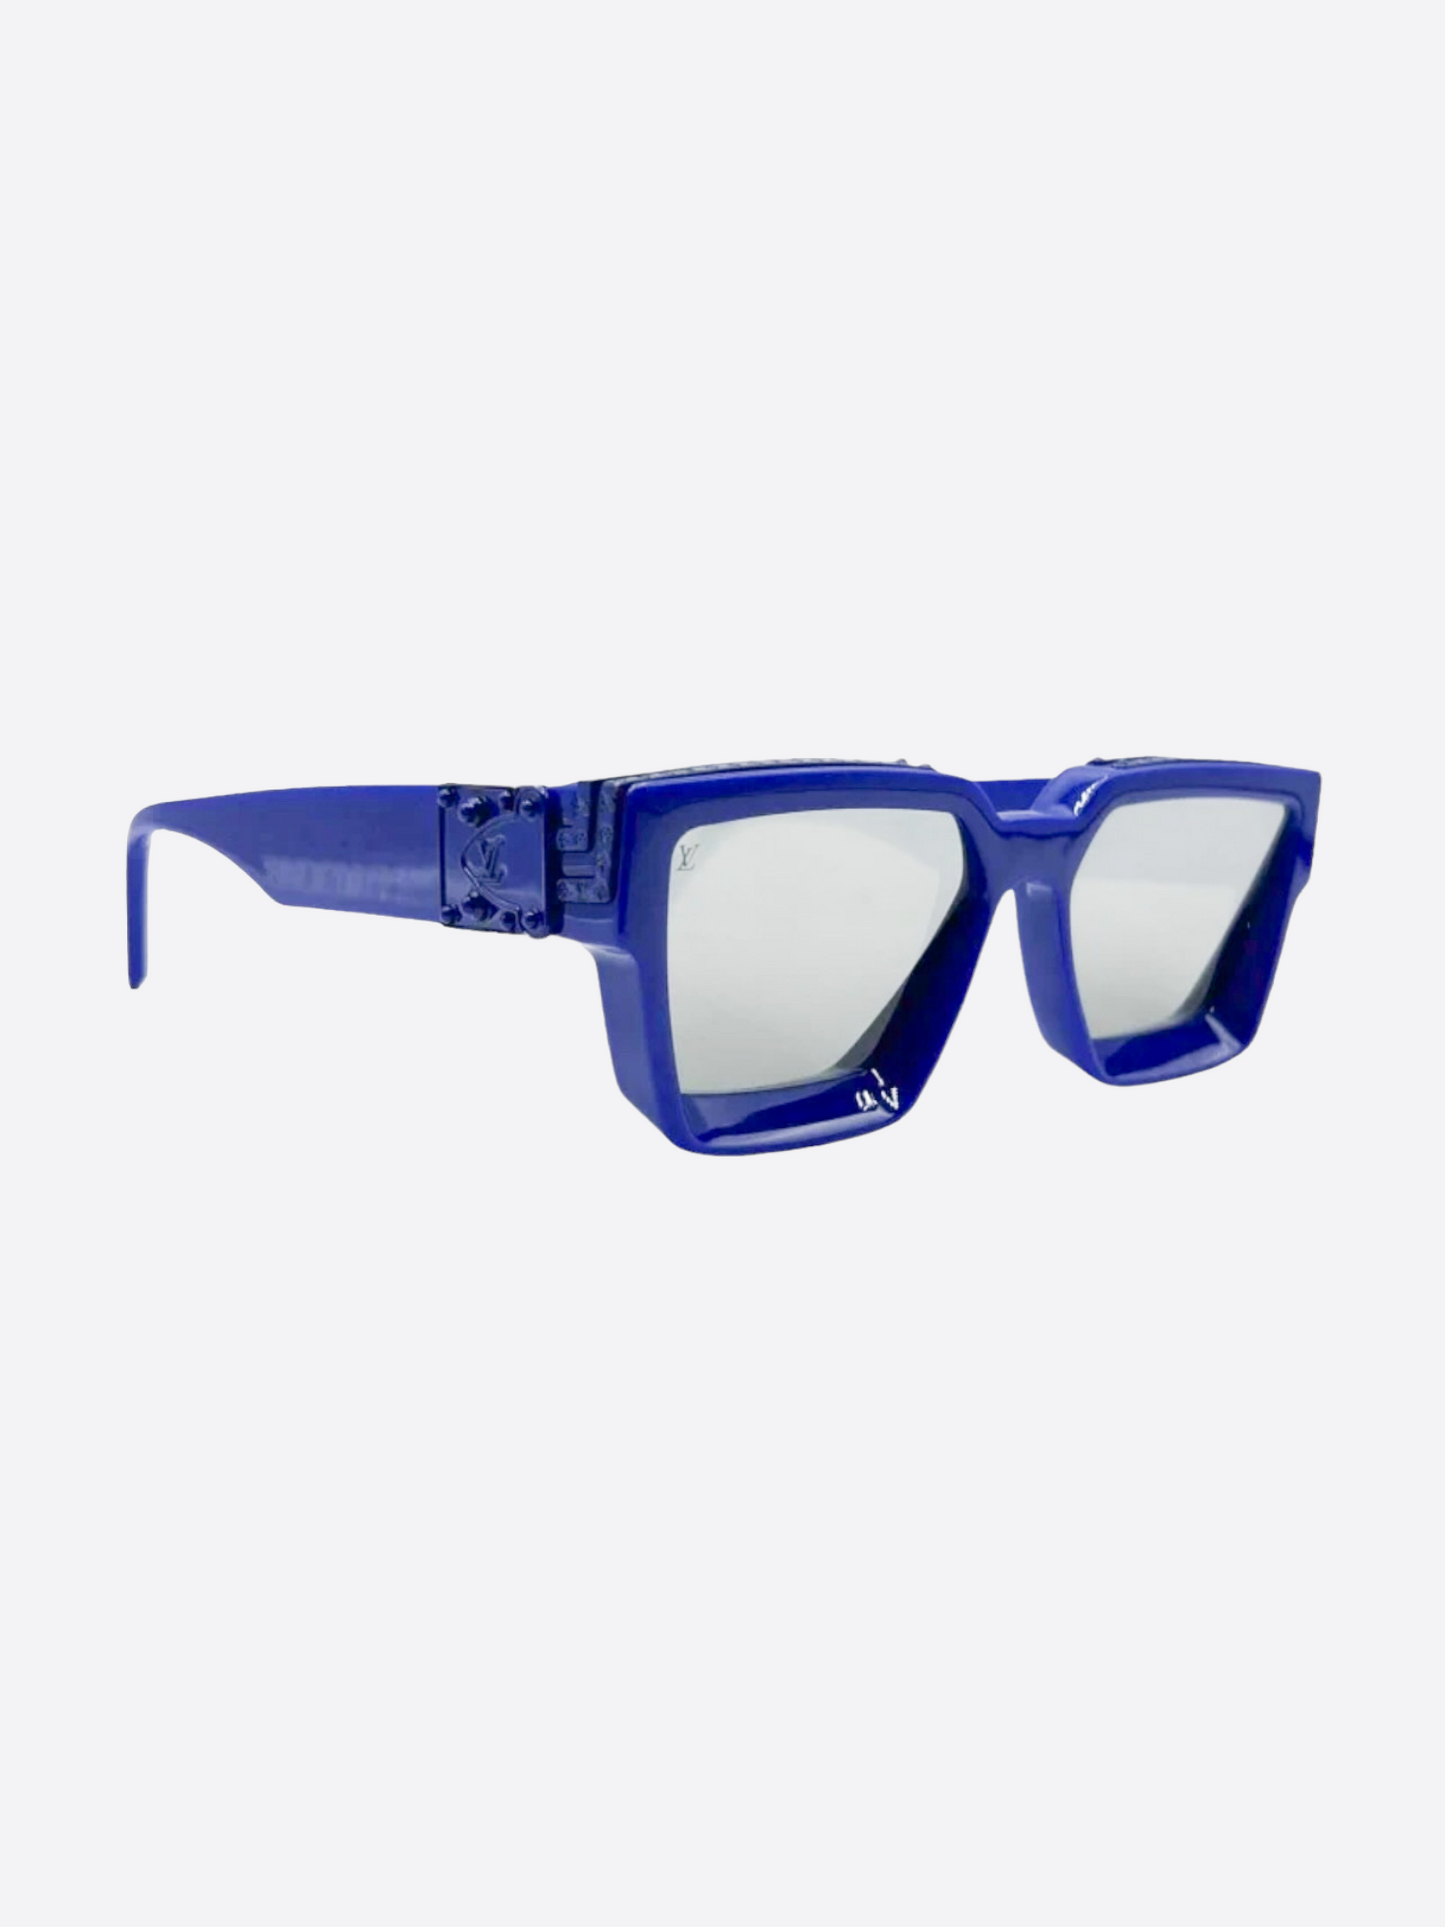 Louis Vuitton 1.1 Millionaire Shades Sunglasses Buffs for Sale in